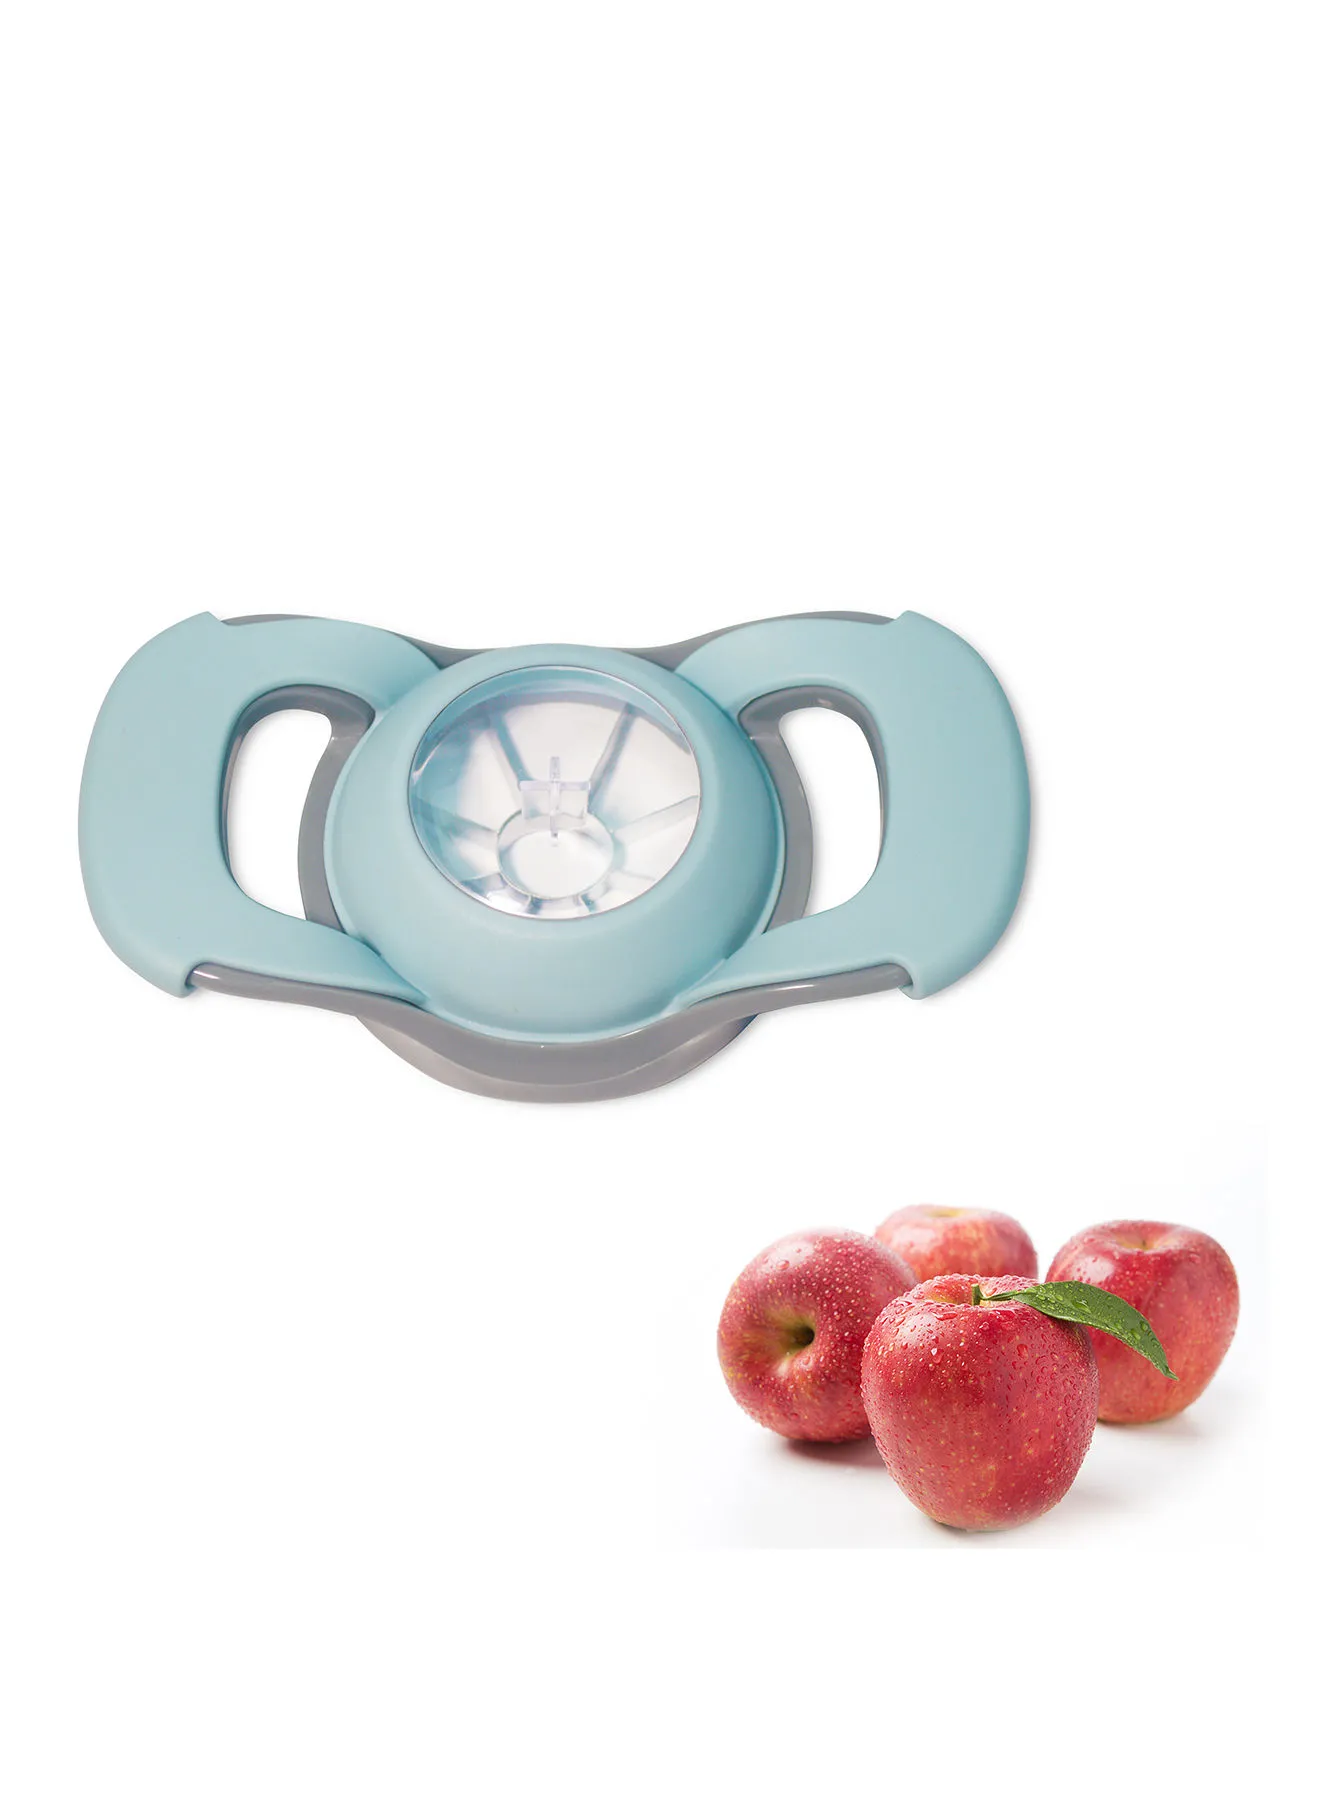 Amal Apple Corer - Kitchen Accessories - Kitchen Tool - Fruits - Light Blue/Grey